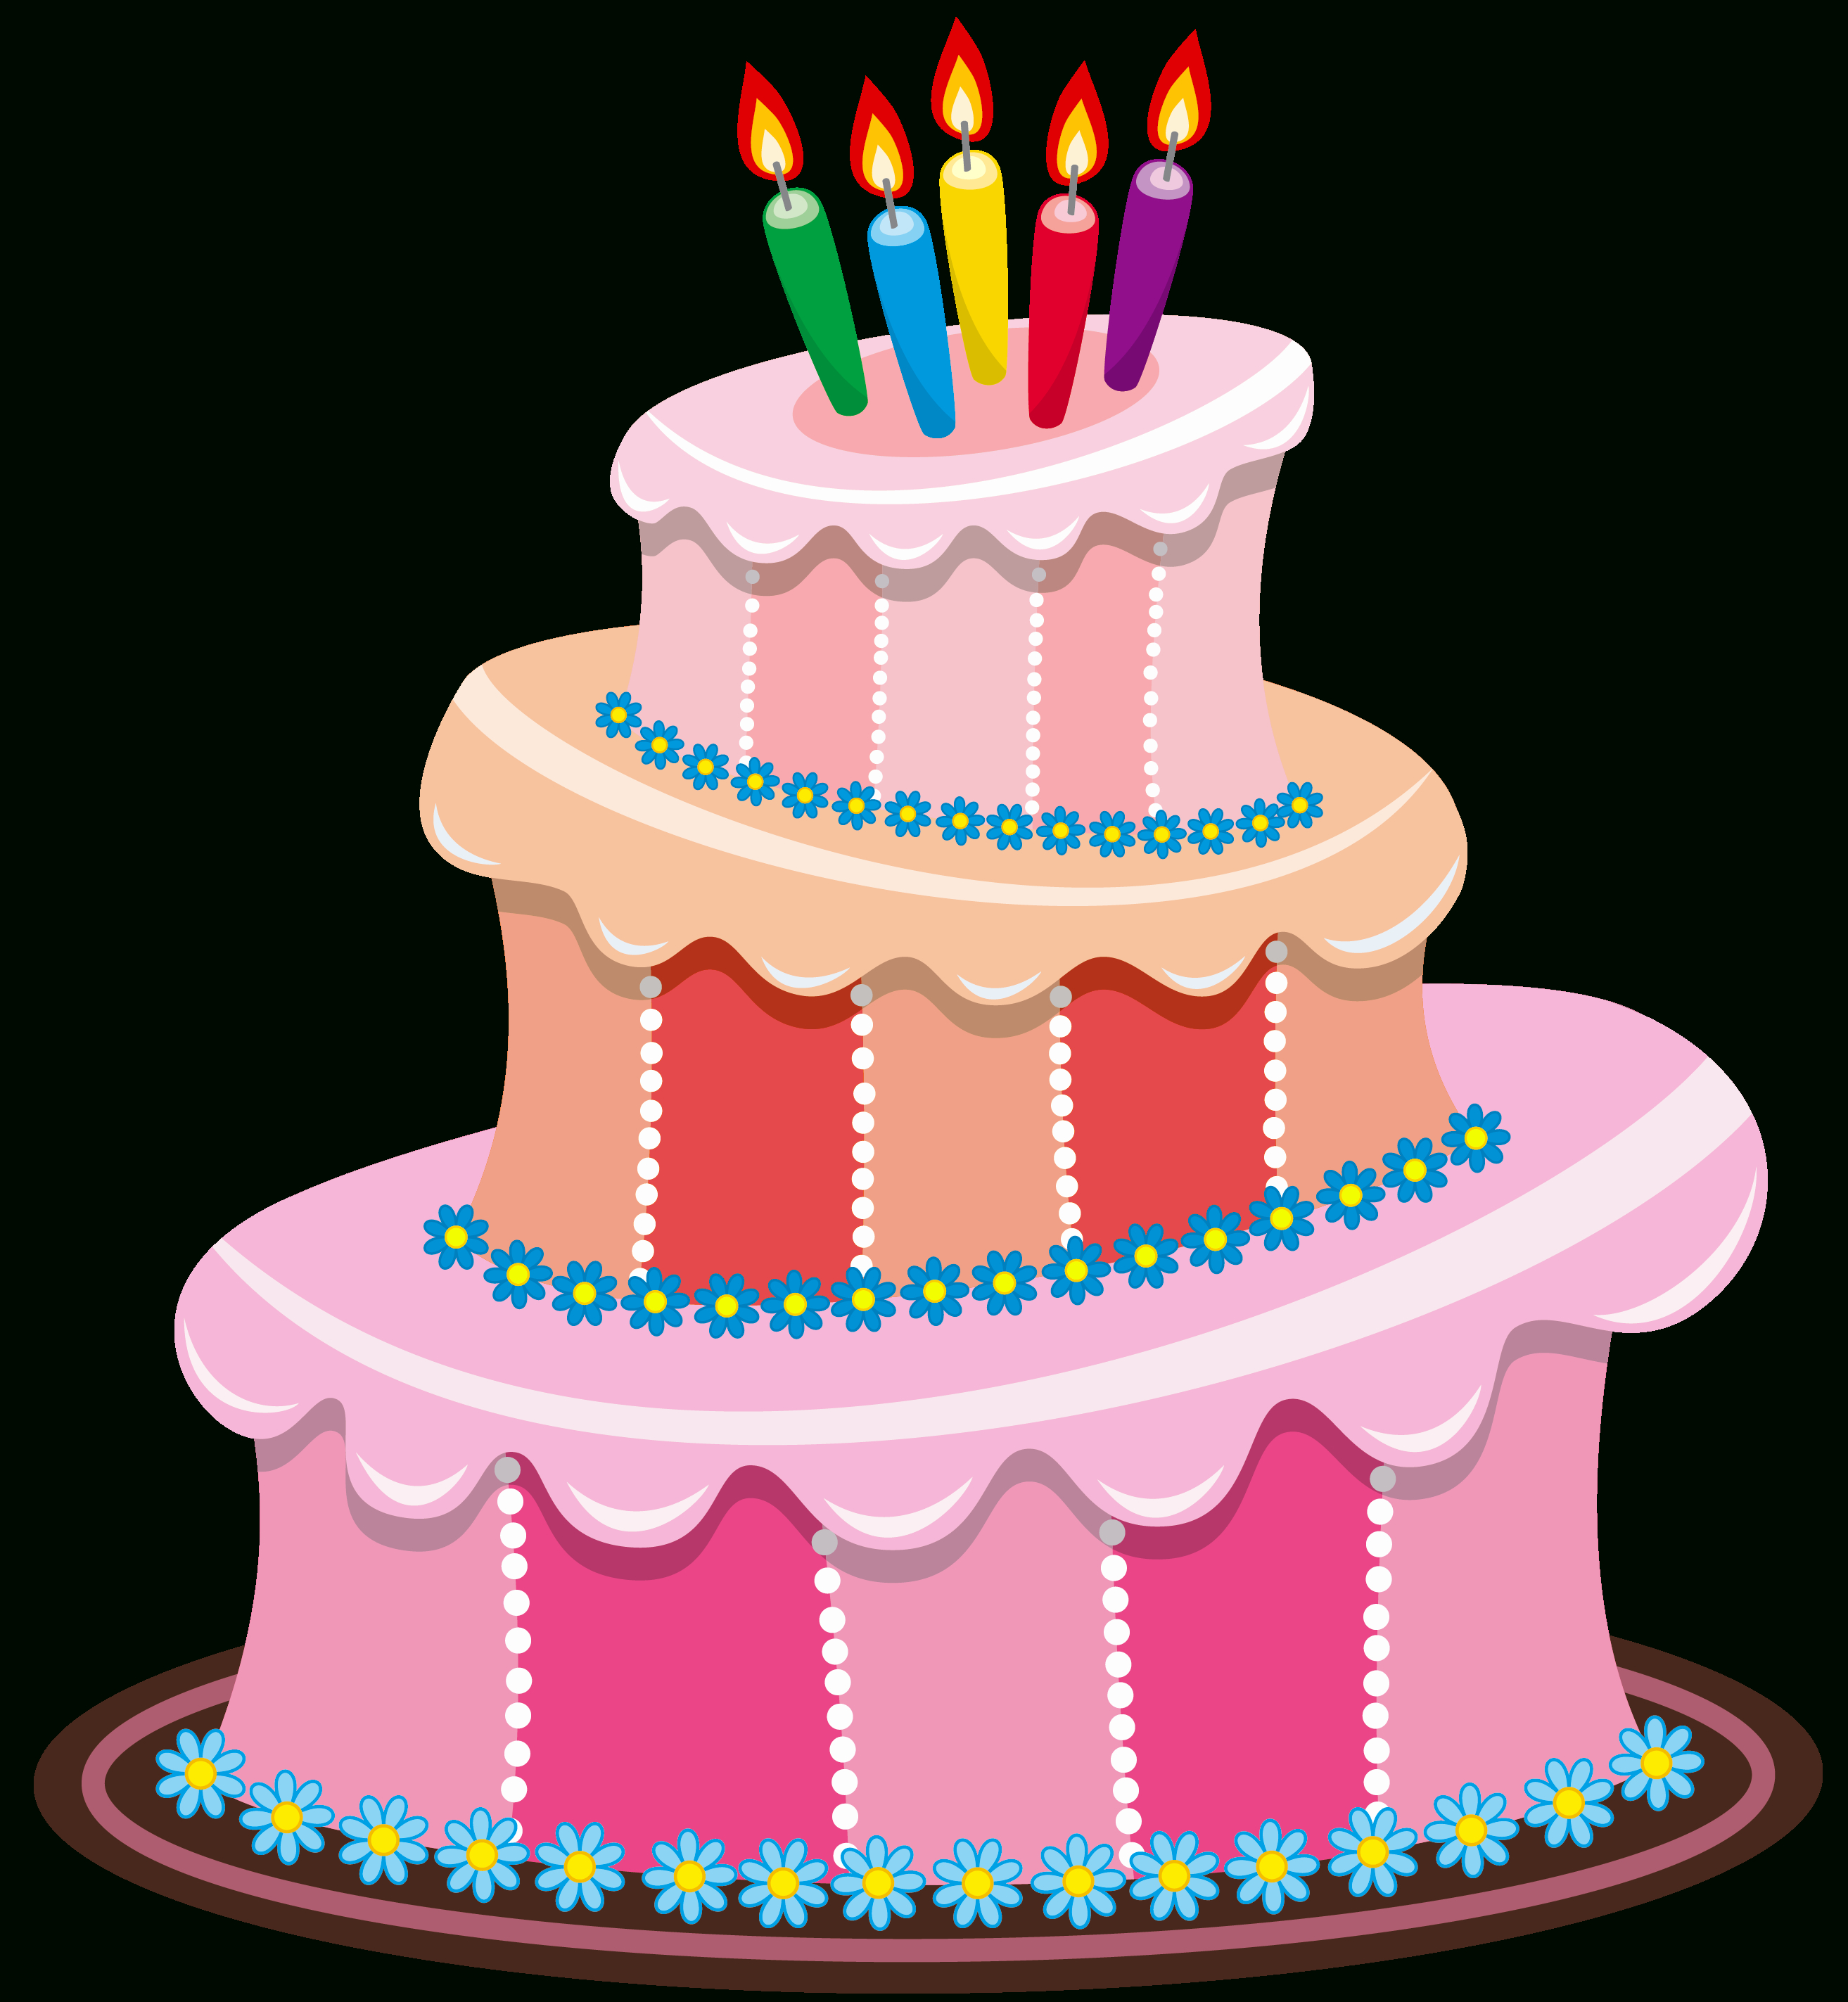 Animated birthday cakes